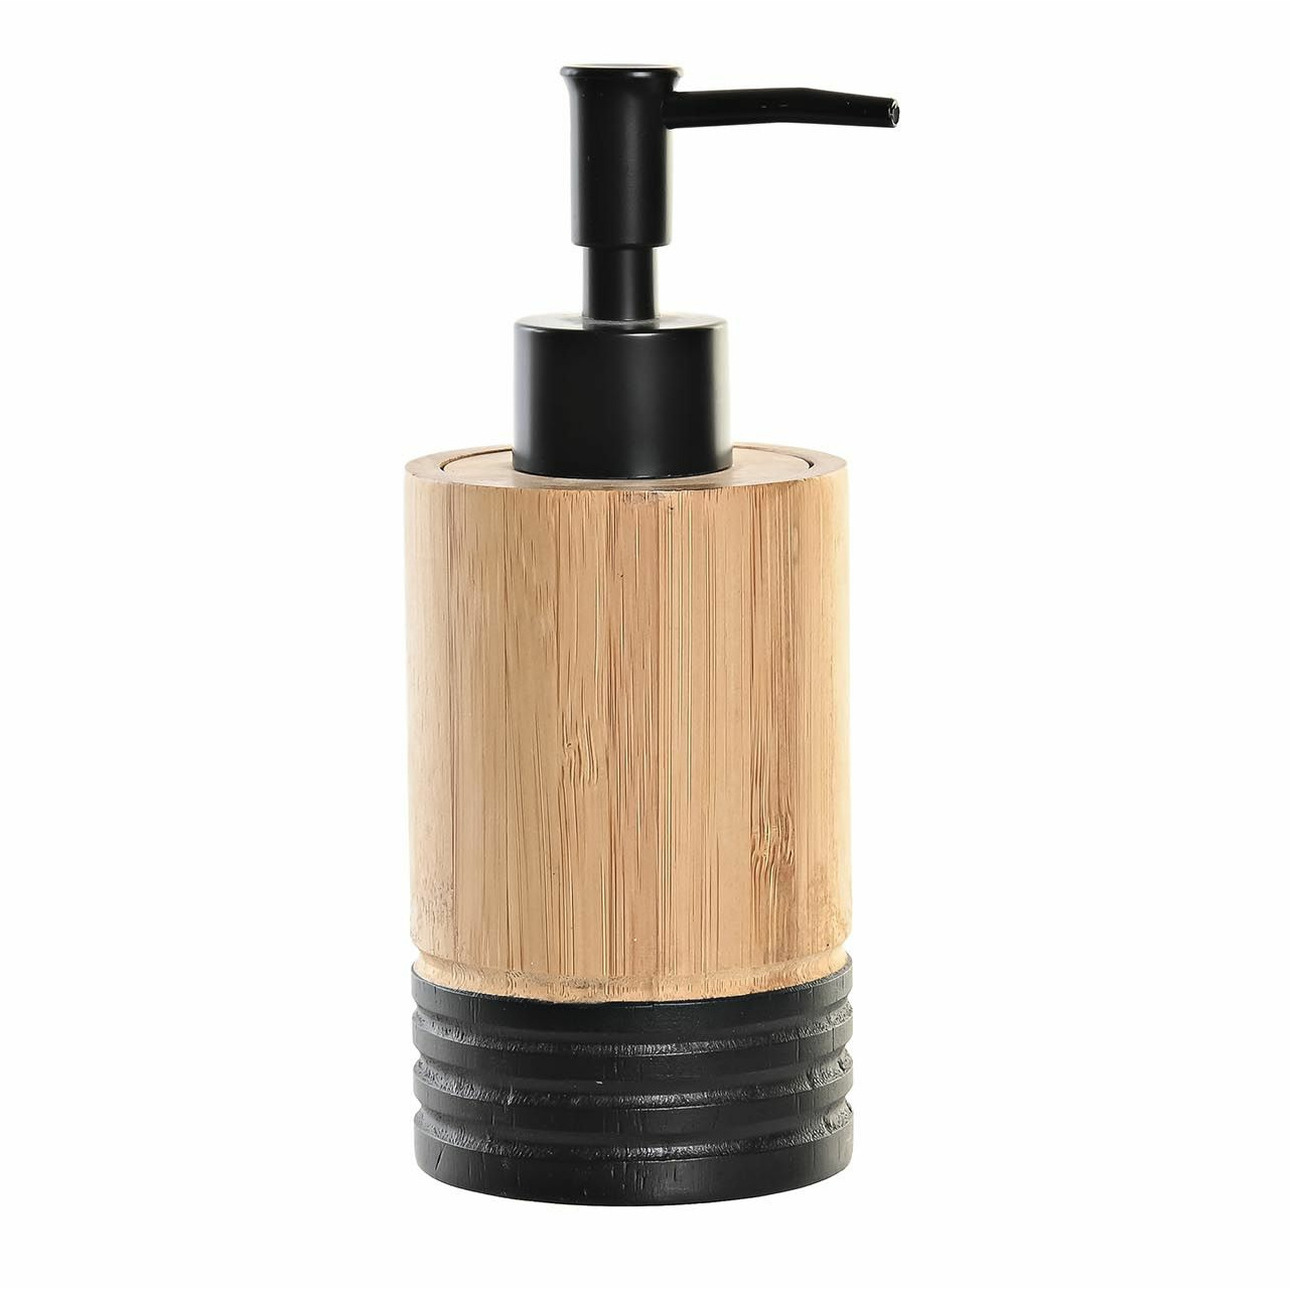 Zeeppompje-dispenser bruin-zwart bamboe hout 7 x 17 cm